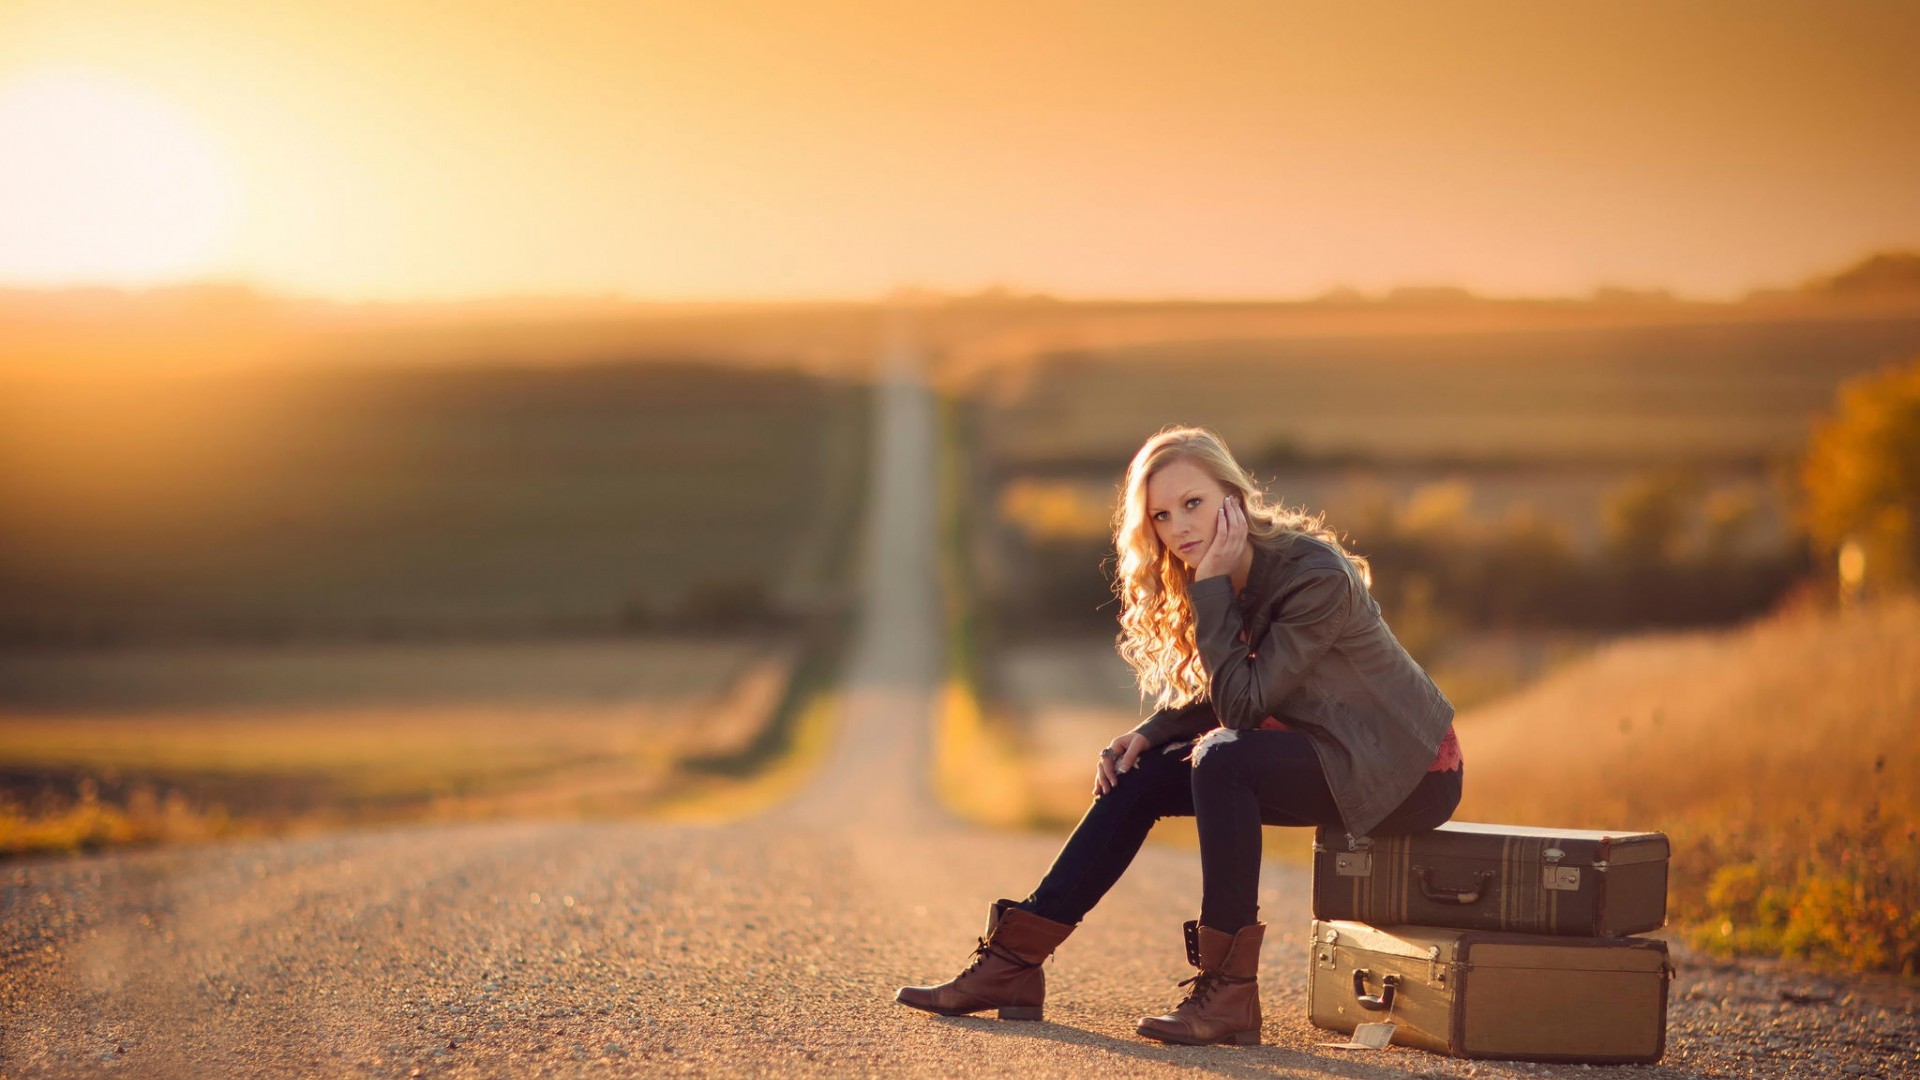 women blonde women outdoors road sunset suitcases sitting jake olson nebraska curly hair Wallpaper